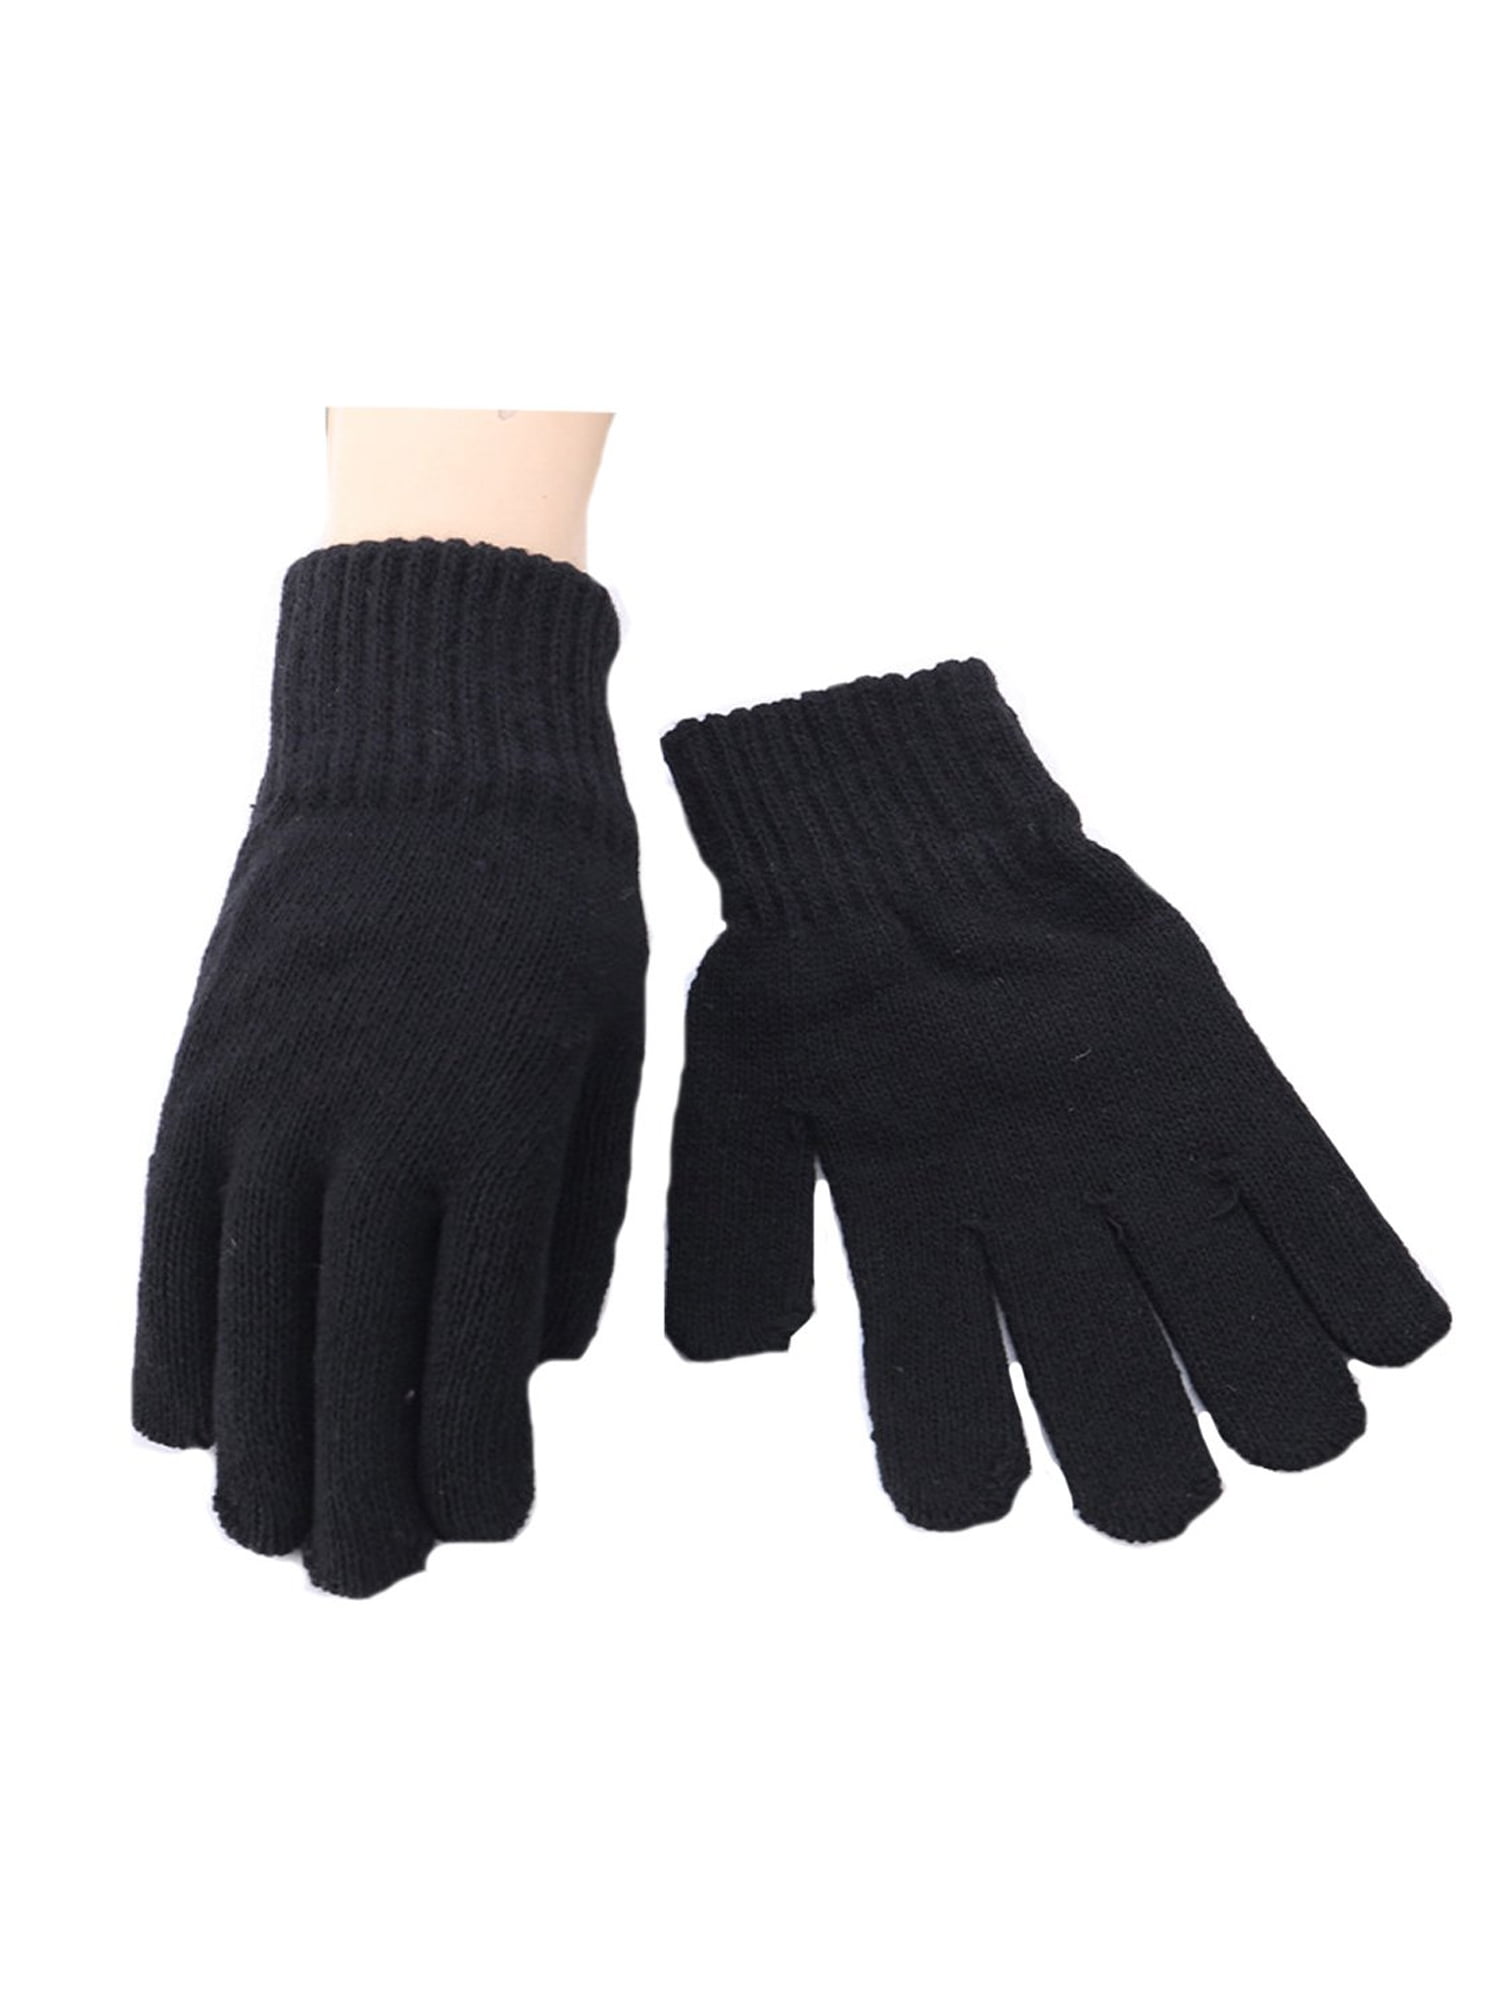 Black Magic Gloves Christmas Gift Box Unisex Men Ladies one size 6 12 24 Pair 